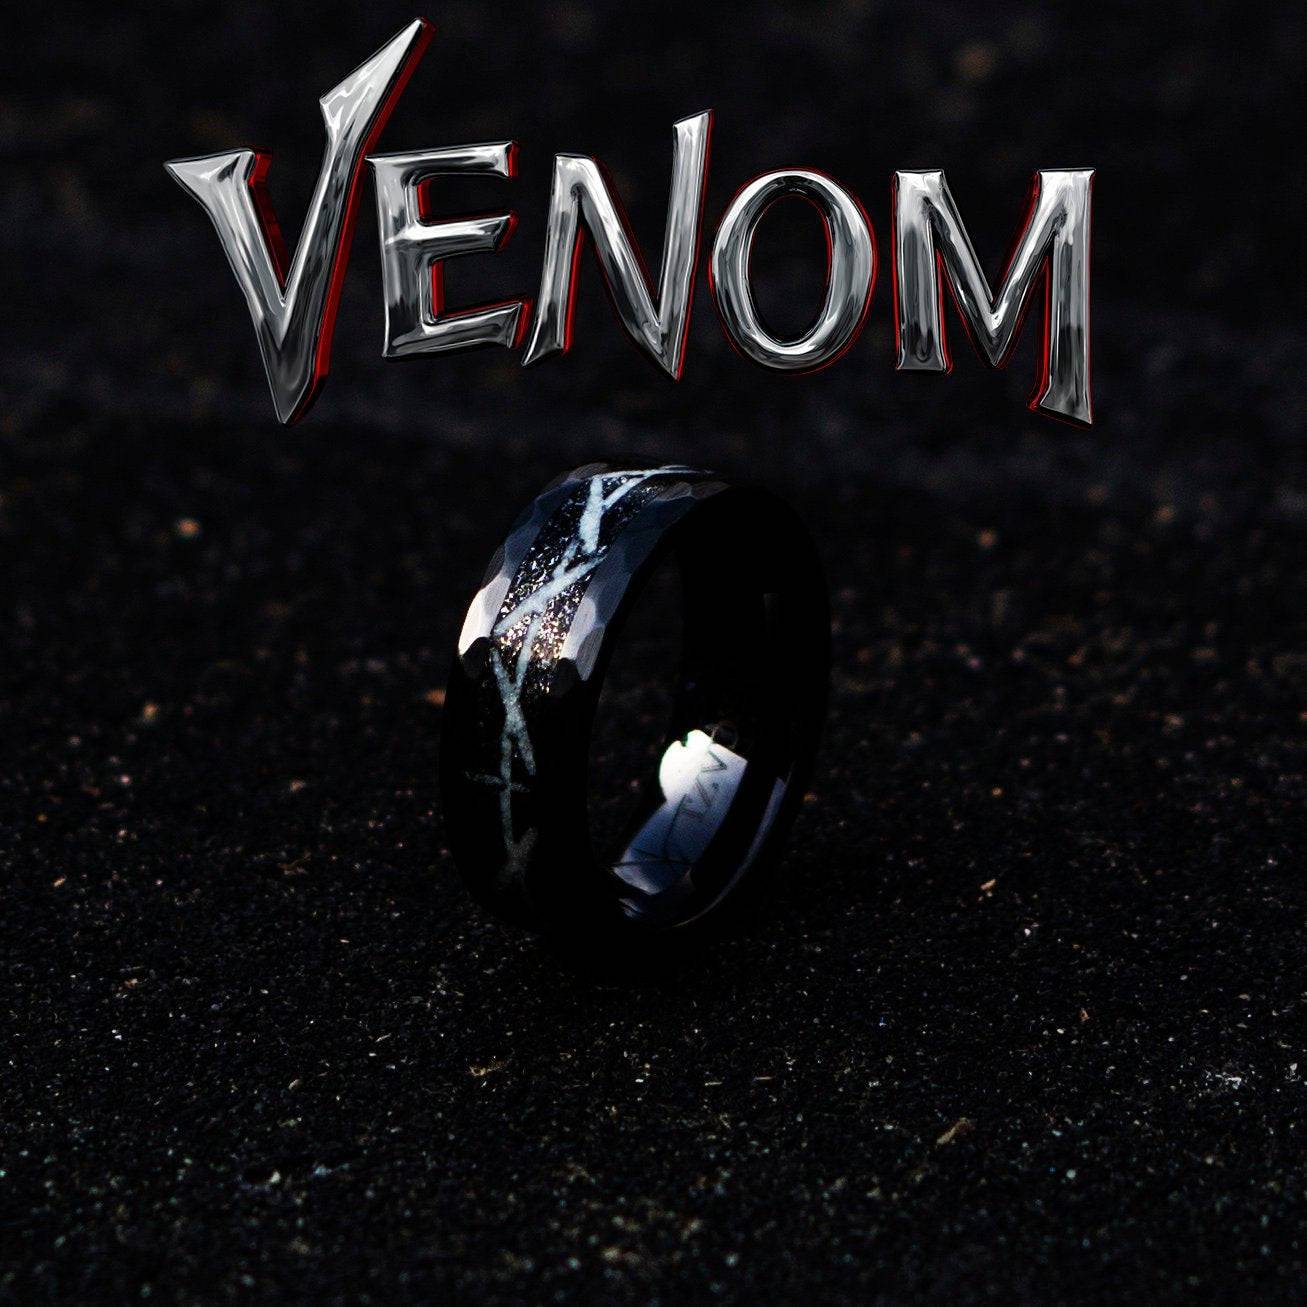 Marvel Venom Black Hammerd ceramic ring, wedding, mens wedding band, opal ring, meteorite, meteorite ring, ceramic ring.